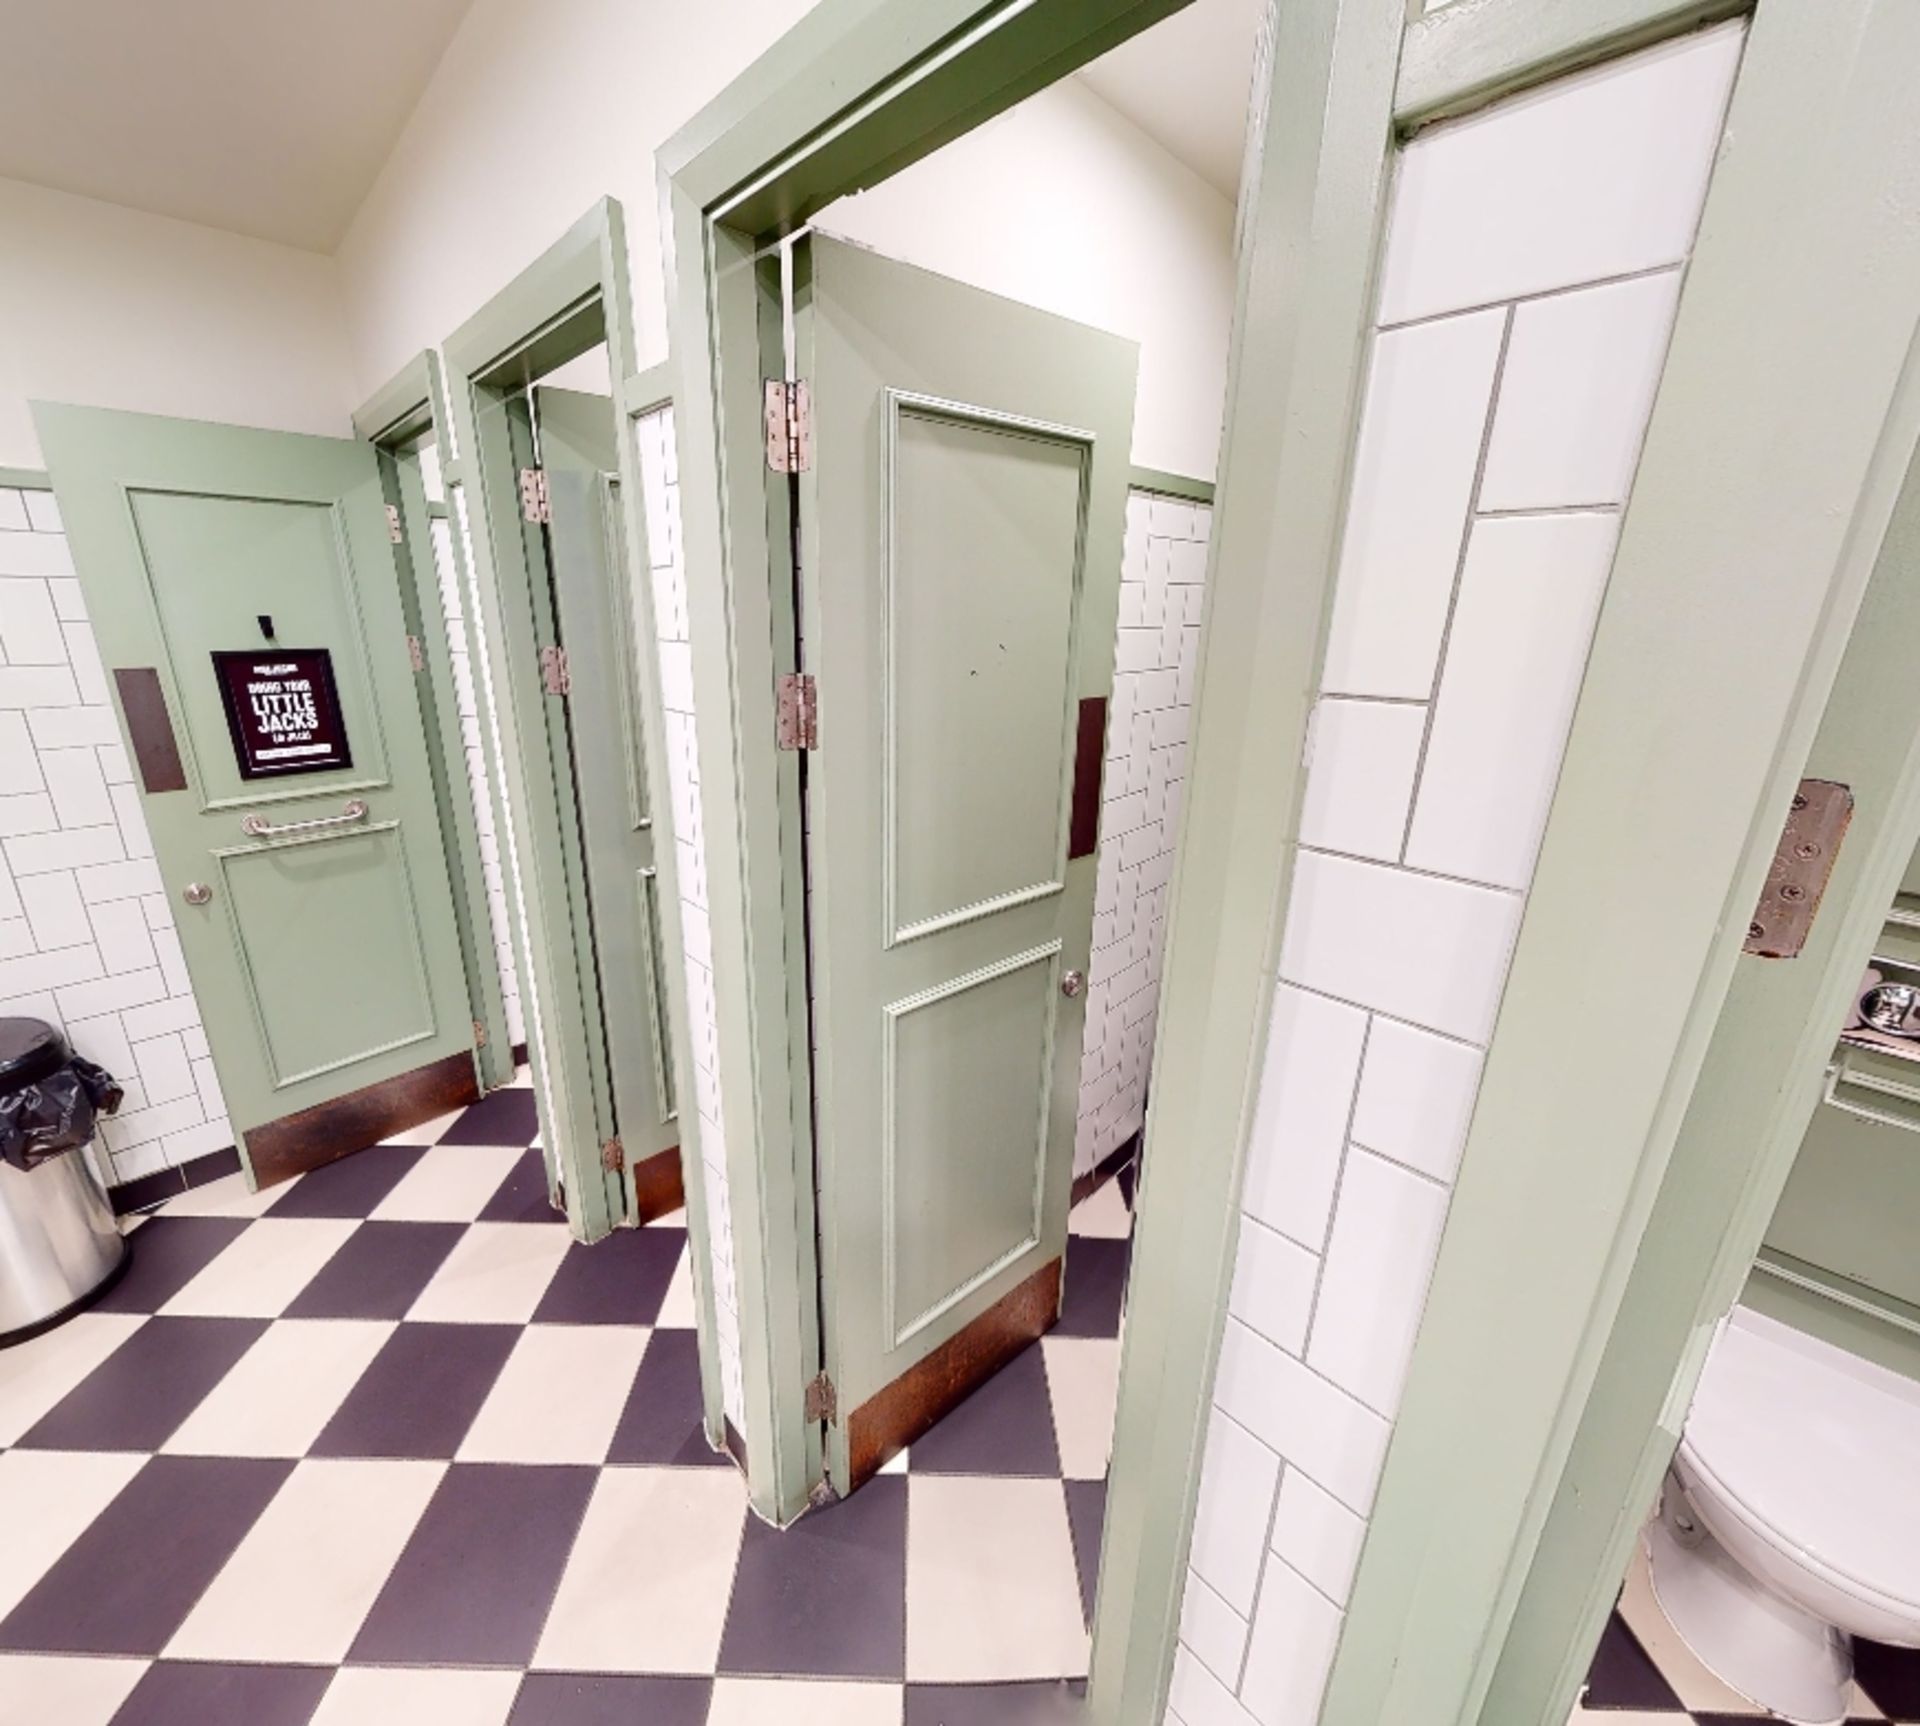 5 x Internal Toilet Cubicle Doors in Pistachio Green - Includes Locks, Hinges, Kick Plates & Handles